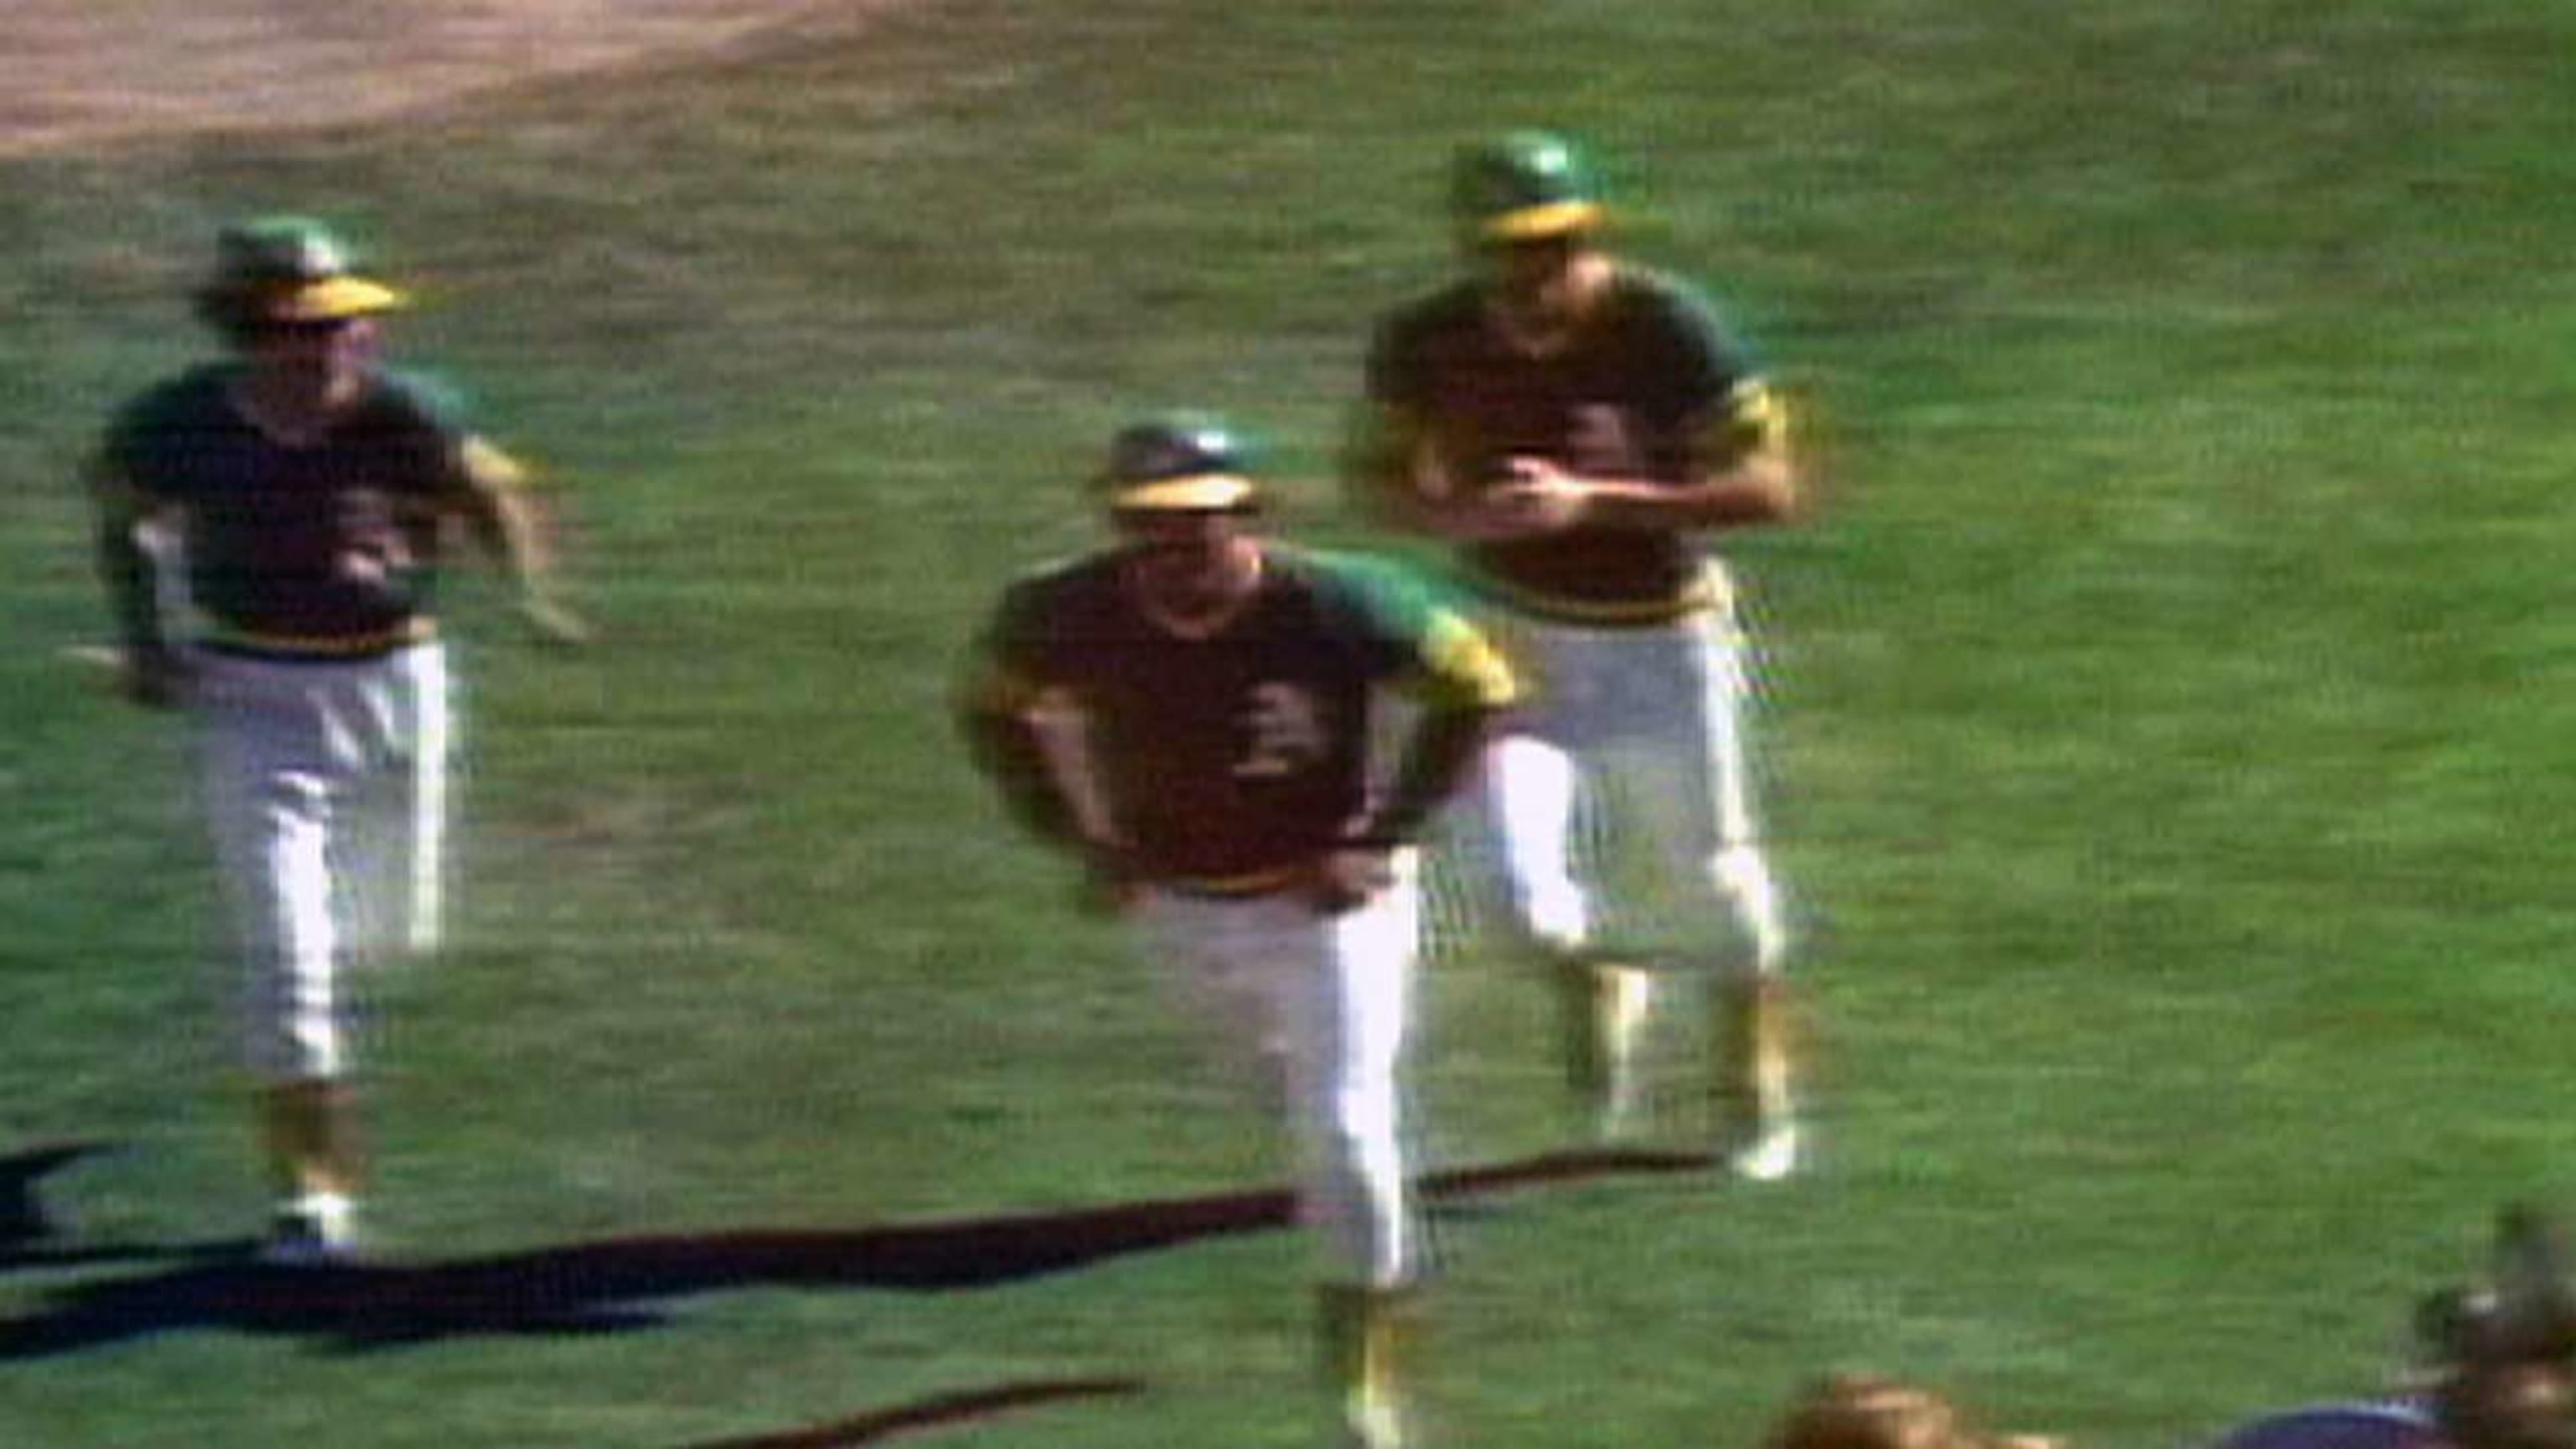 1973 World Series recap